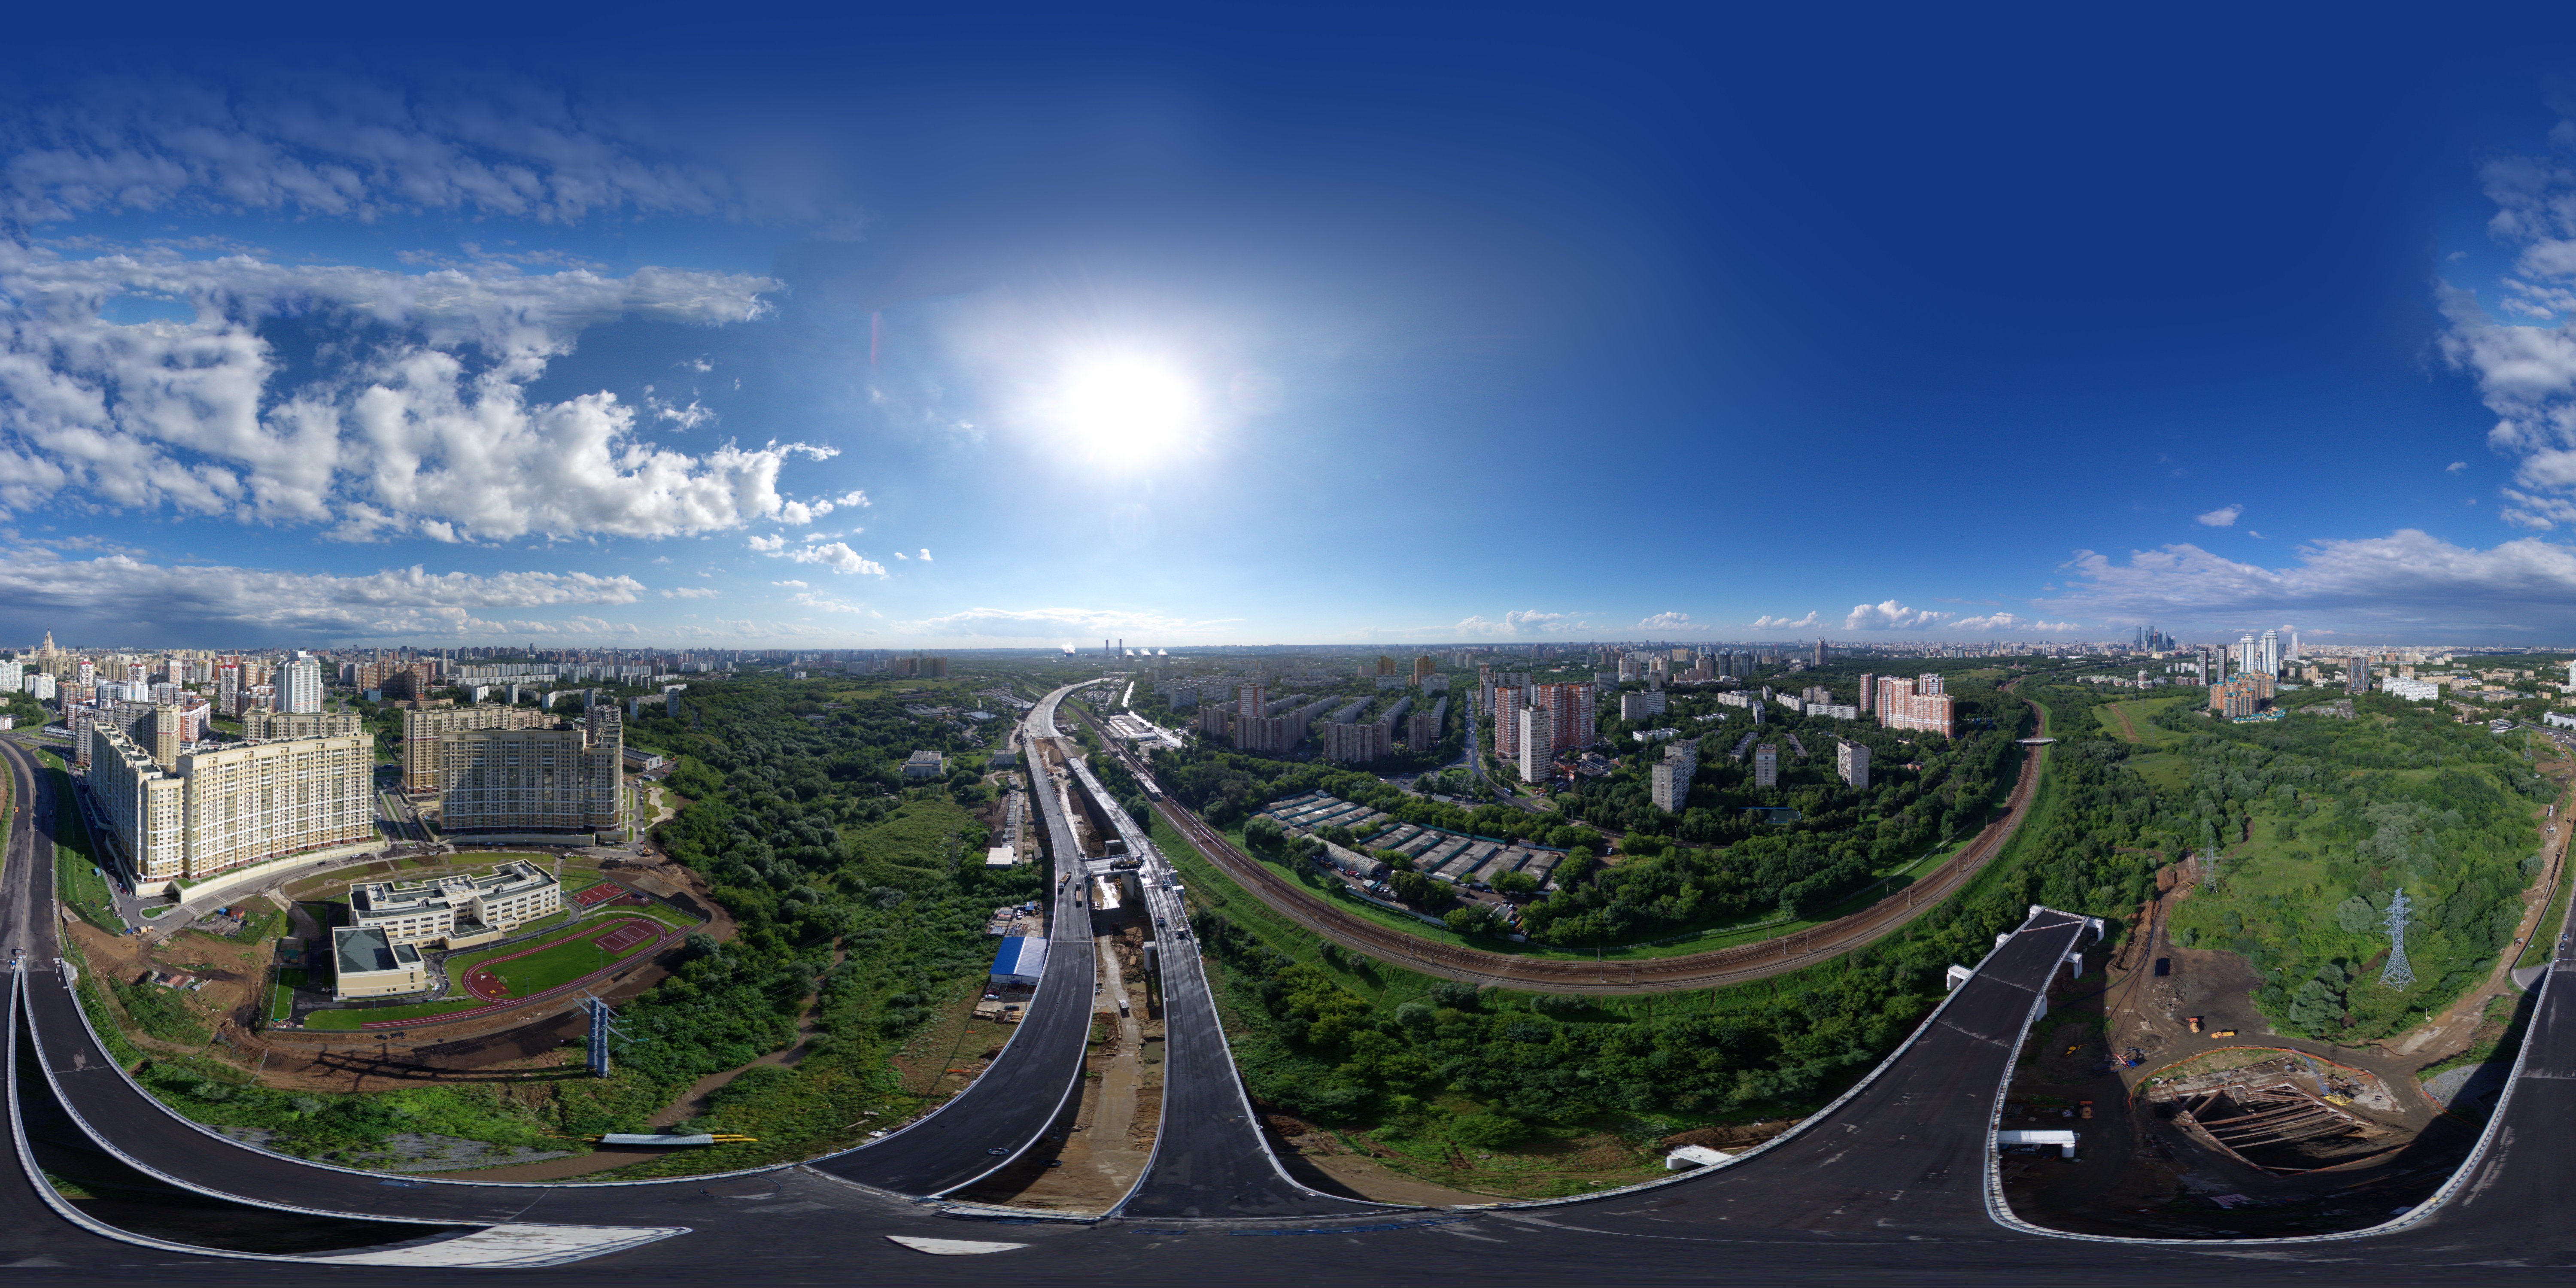 Панорама какая. Панорама 360 Новосибирск. Южное Бутово панорама 360 градусов. Северо-Западная хорда панорама. Панорама Медведково.